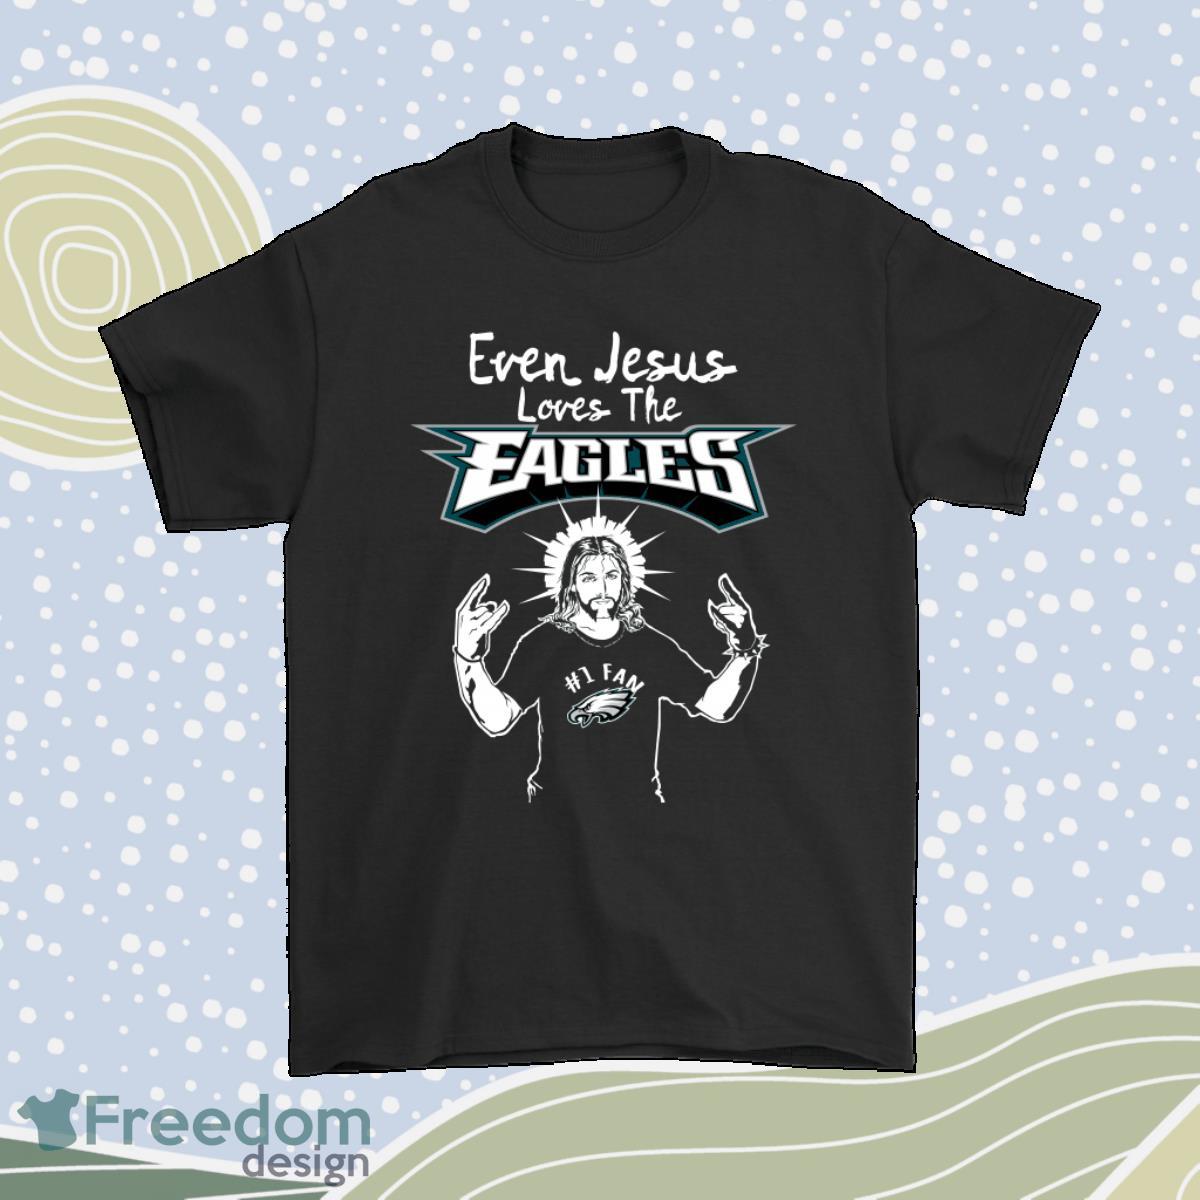 Even Jesus Loves The Eagles 1 Fan Philadelphia Eagles Shirt Product Photo 1